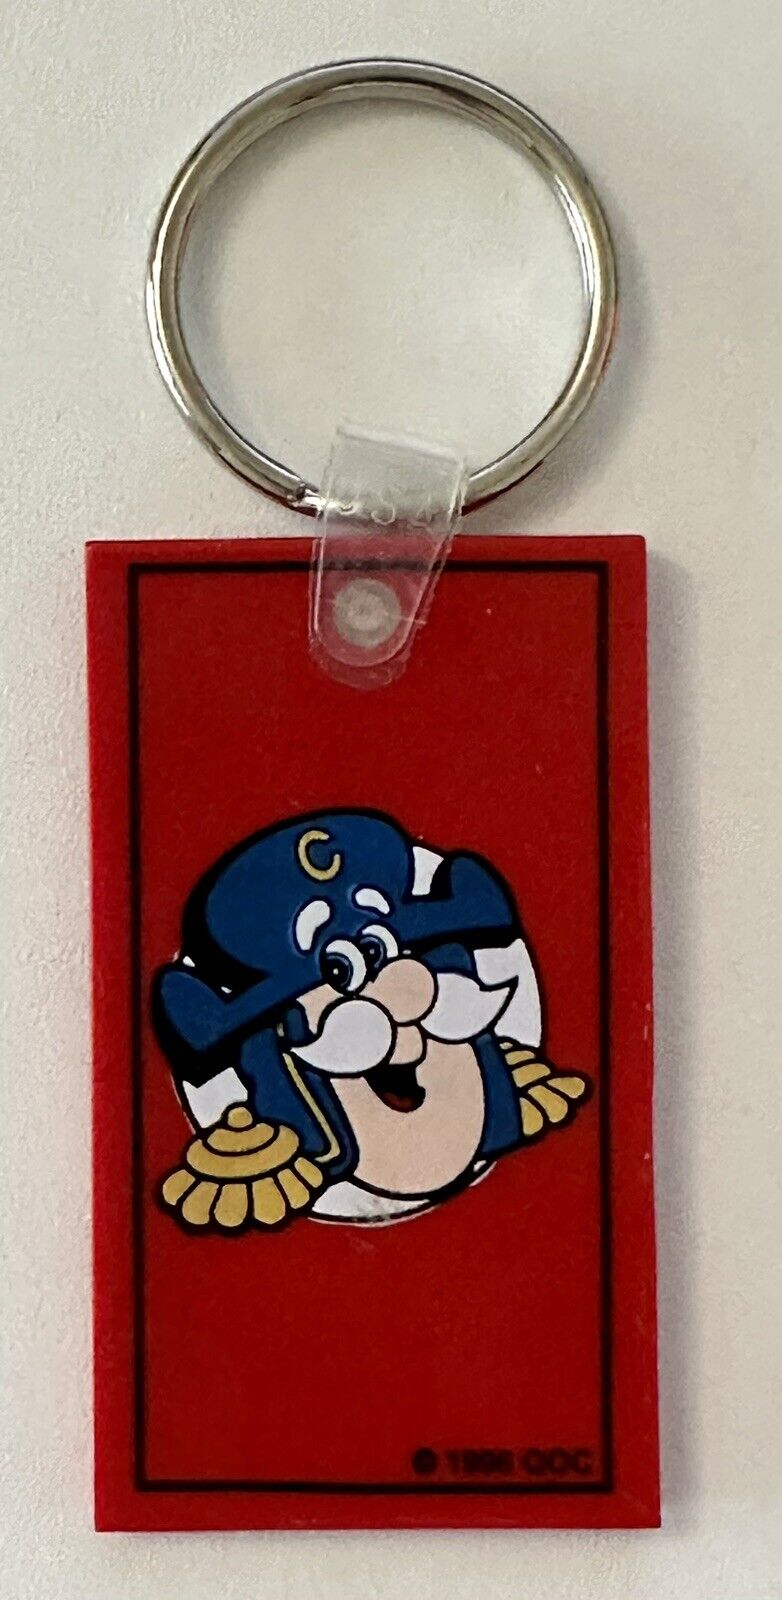 Make it Hap\'n with the Cap\'n Captain Capt\'n Crunch Keychain Ring 1996 Vintage 